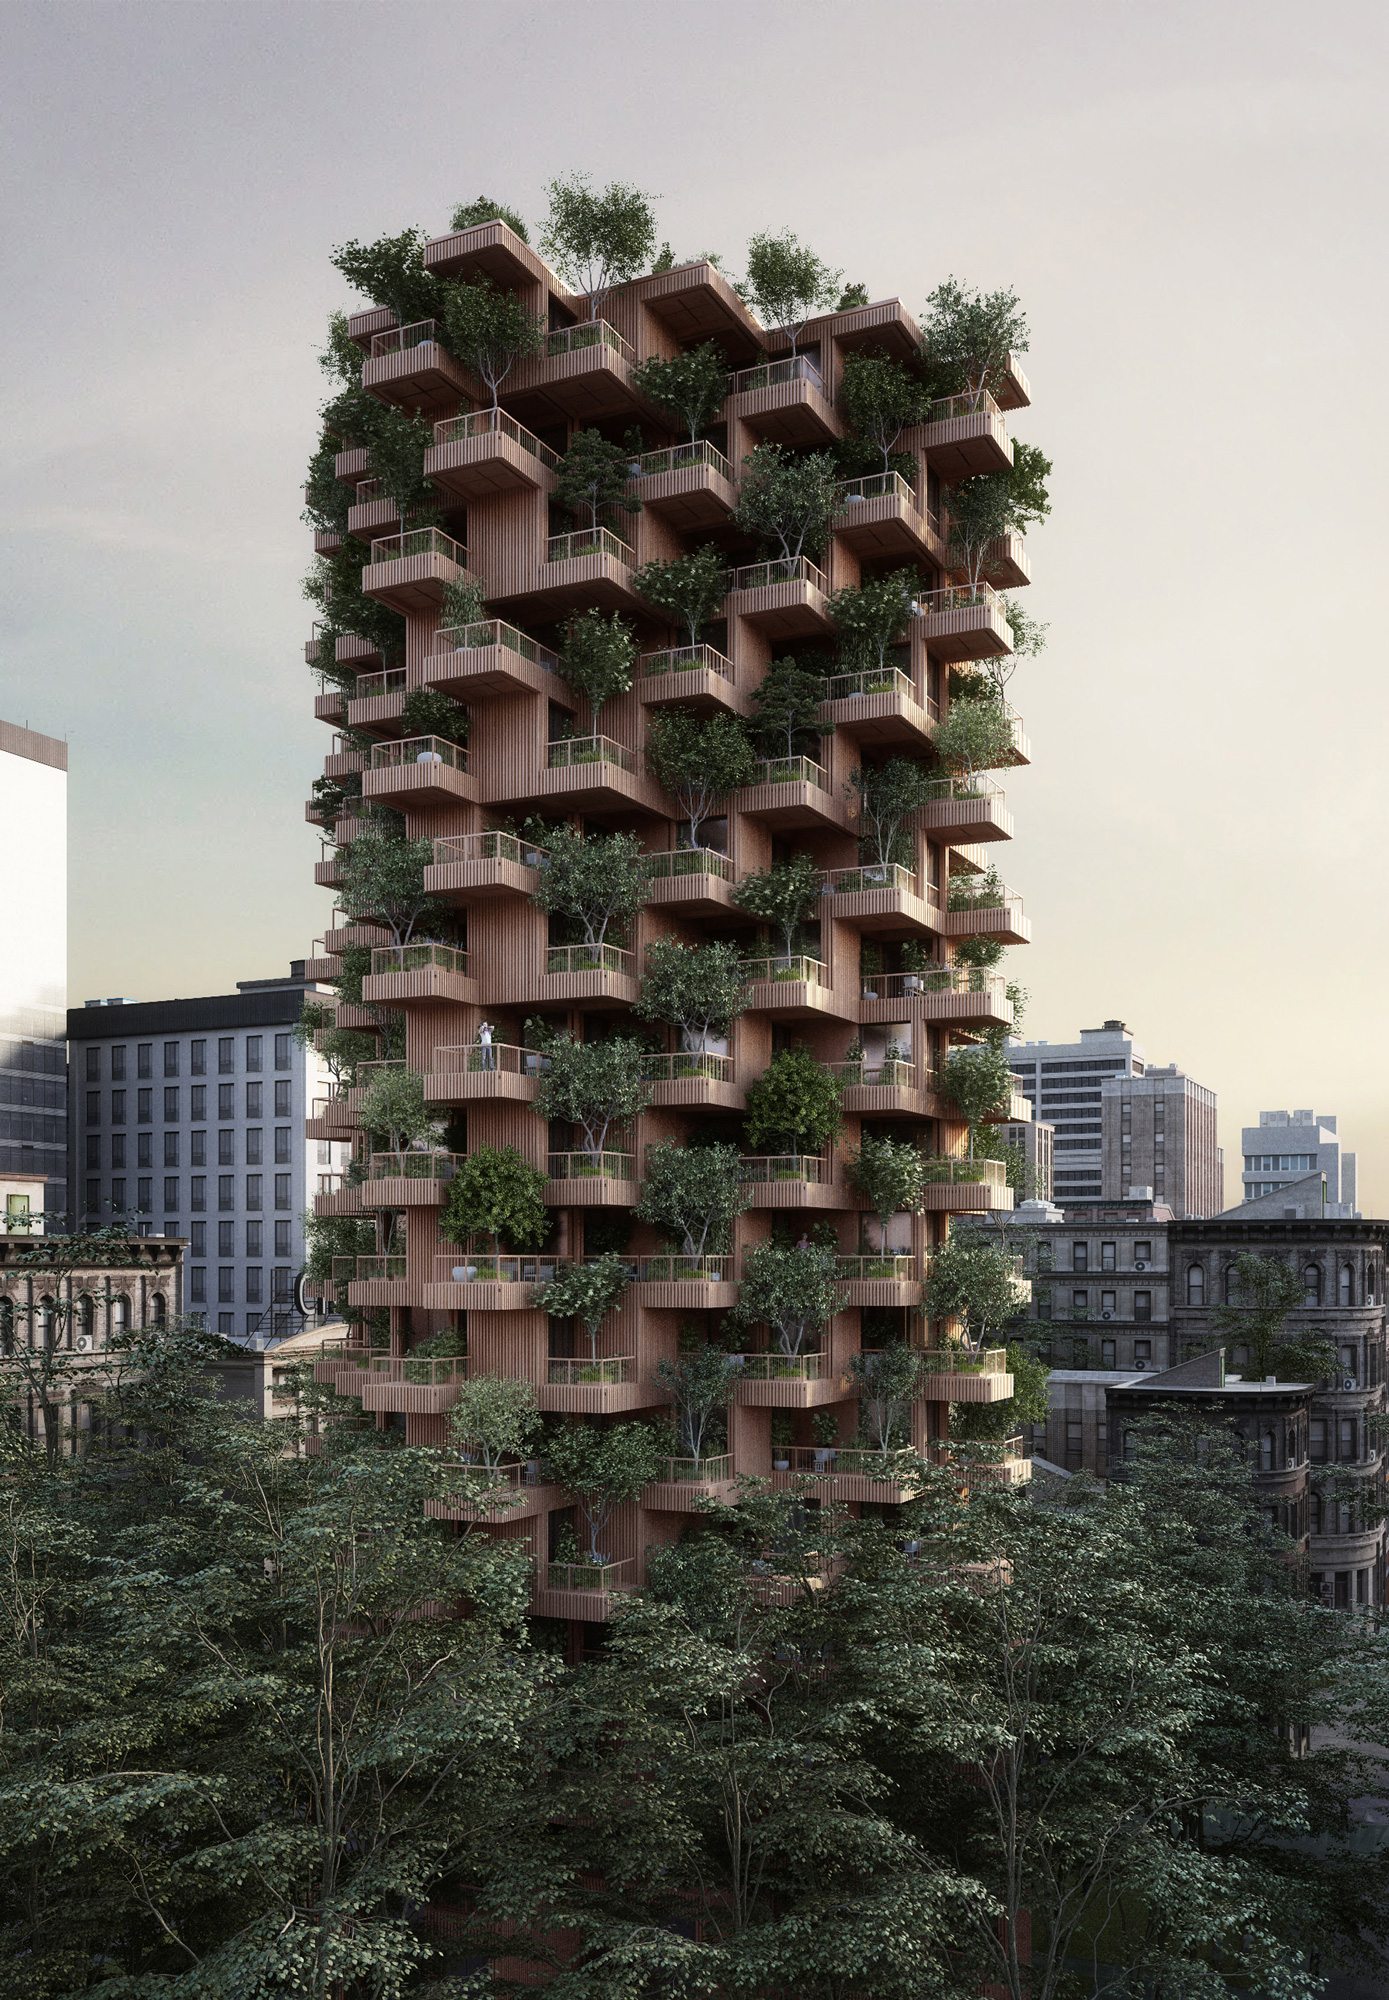 penda | toronto tree tower | Stefano Boeri Architetti